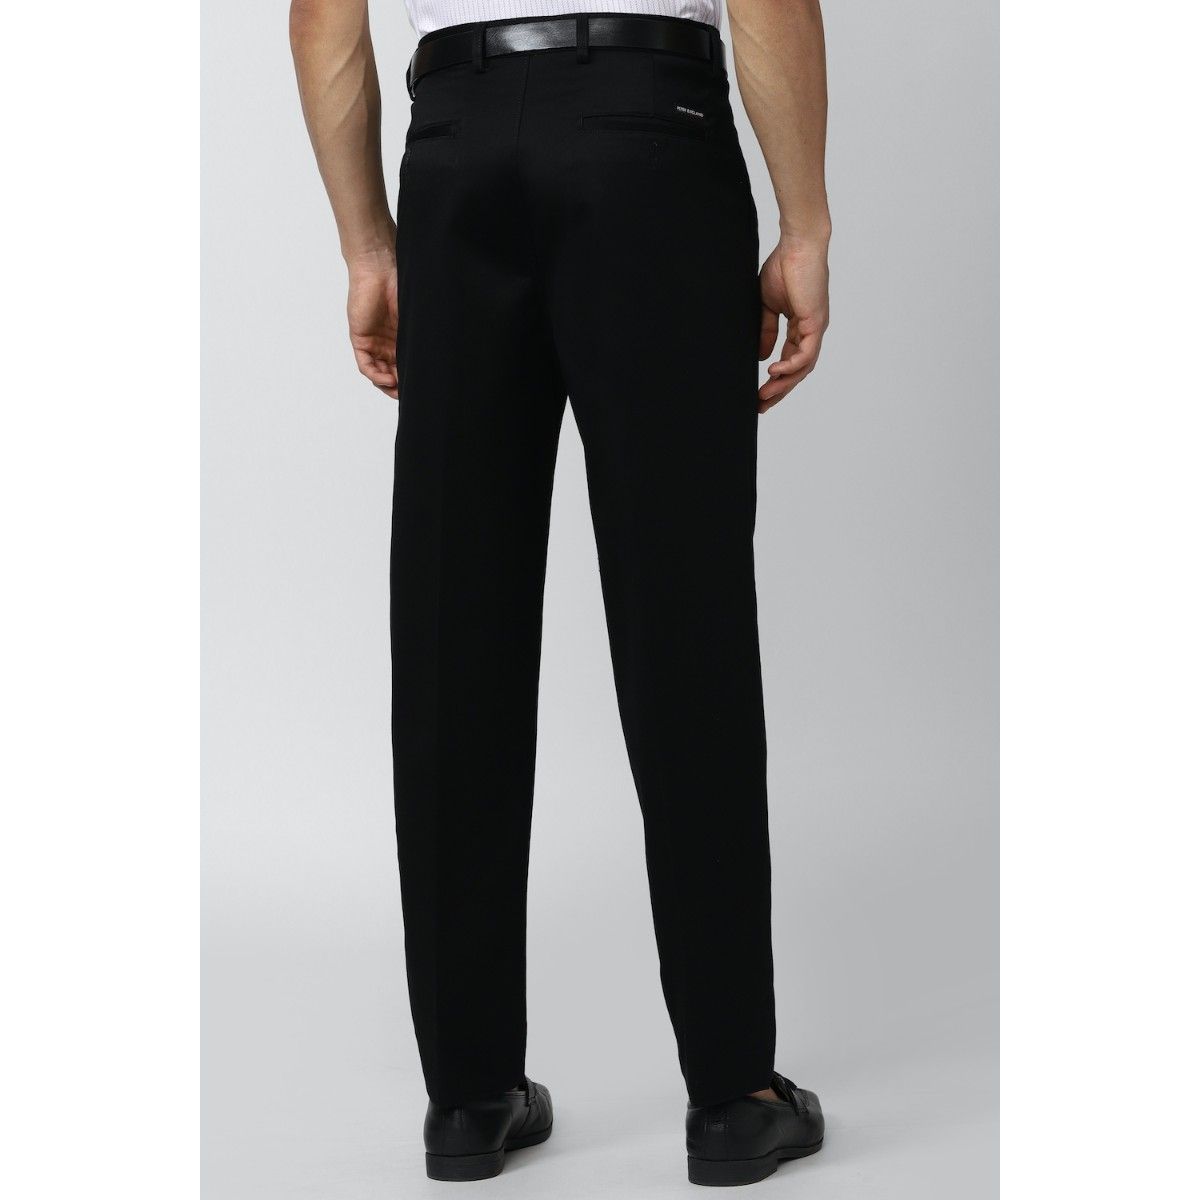 Buy Men Grey Solid Regular Fit Trousers Online - 282879 | Peter England